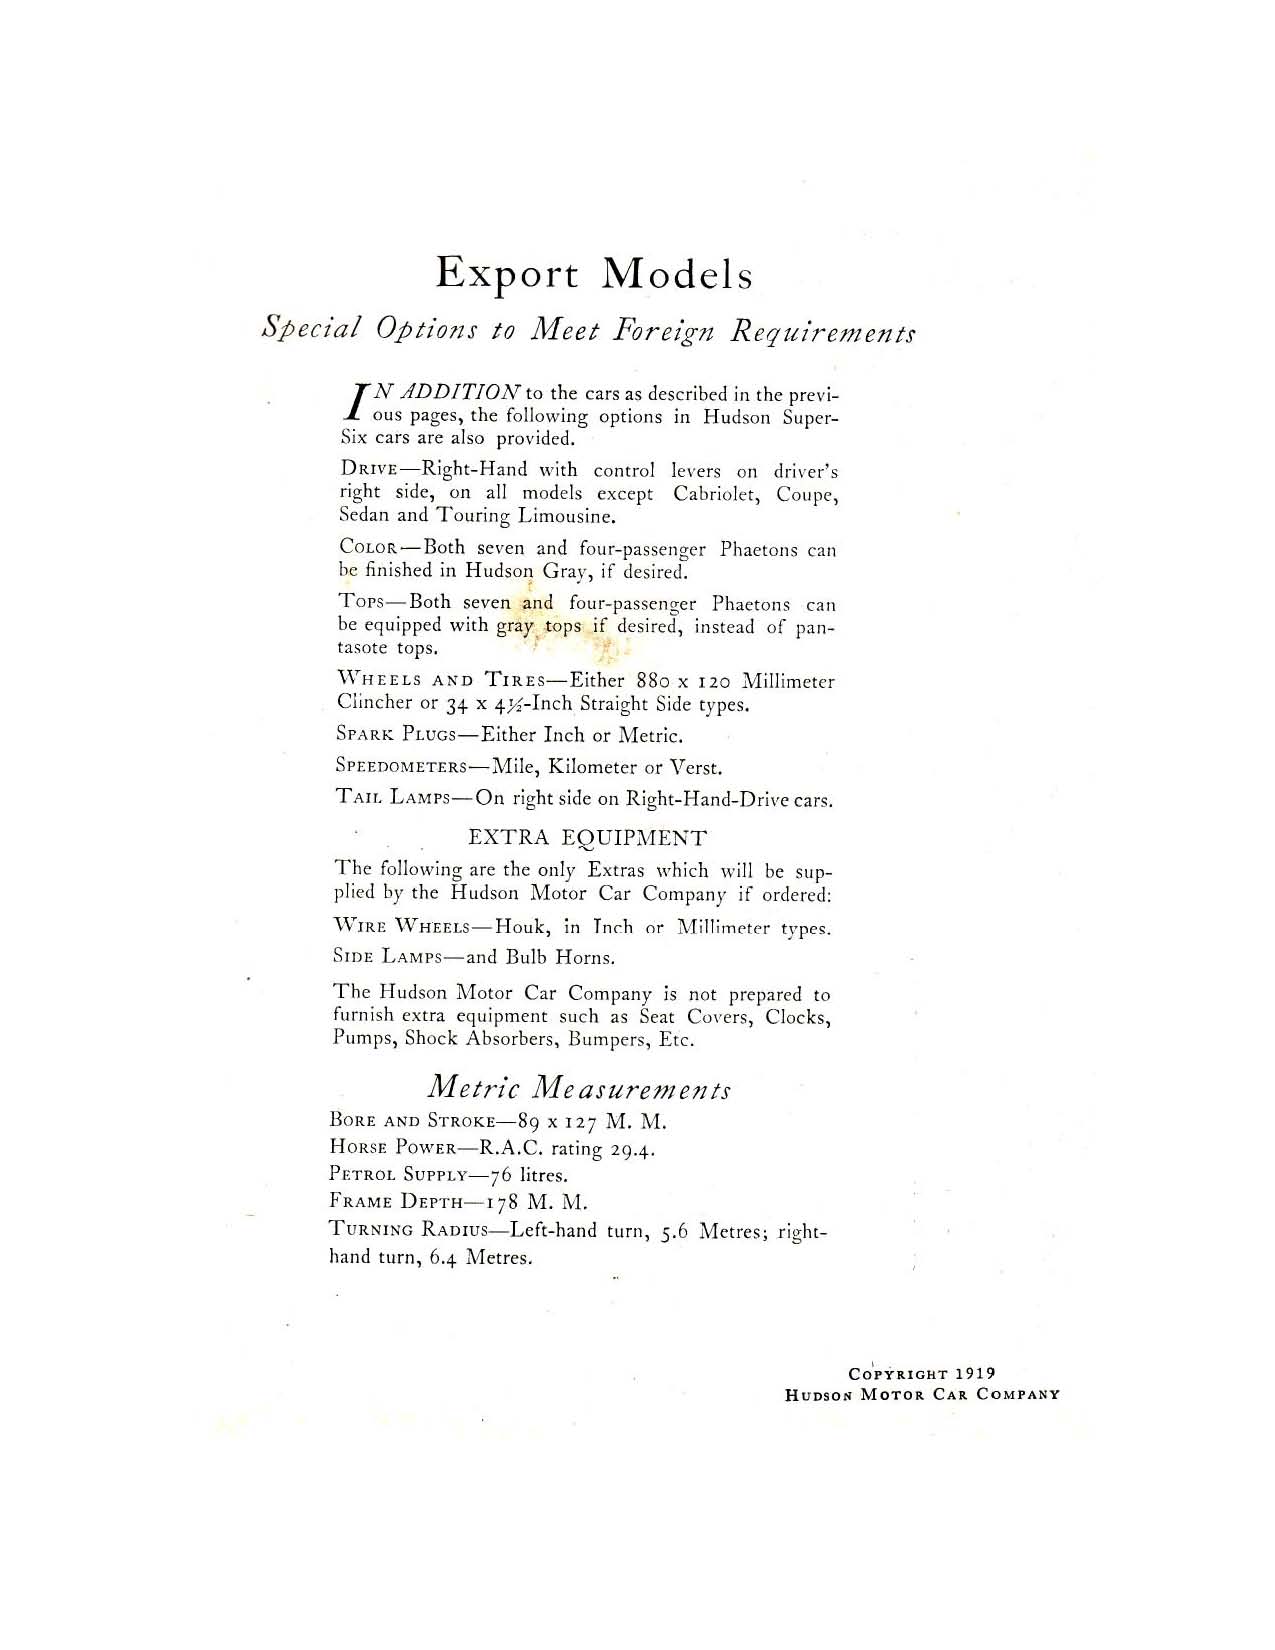 1919 Hudson Super-Six Brochure Page 13